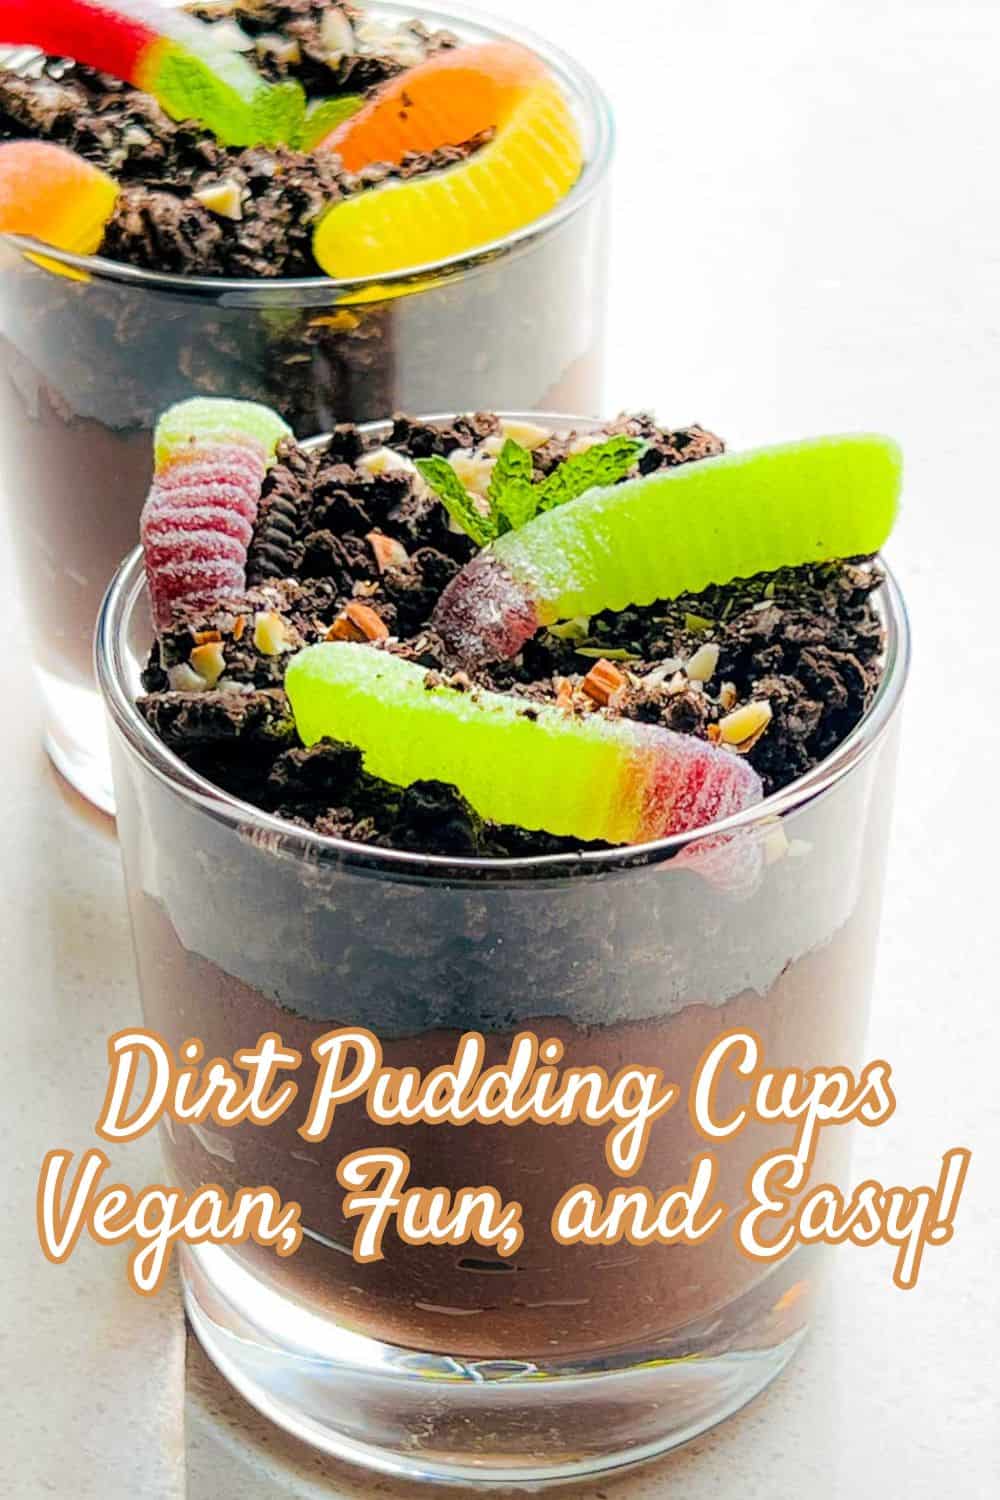 Vegan chocolate dirt pudding Pinterest image.